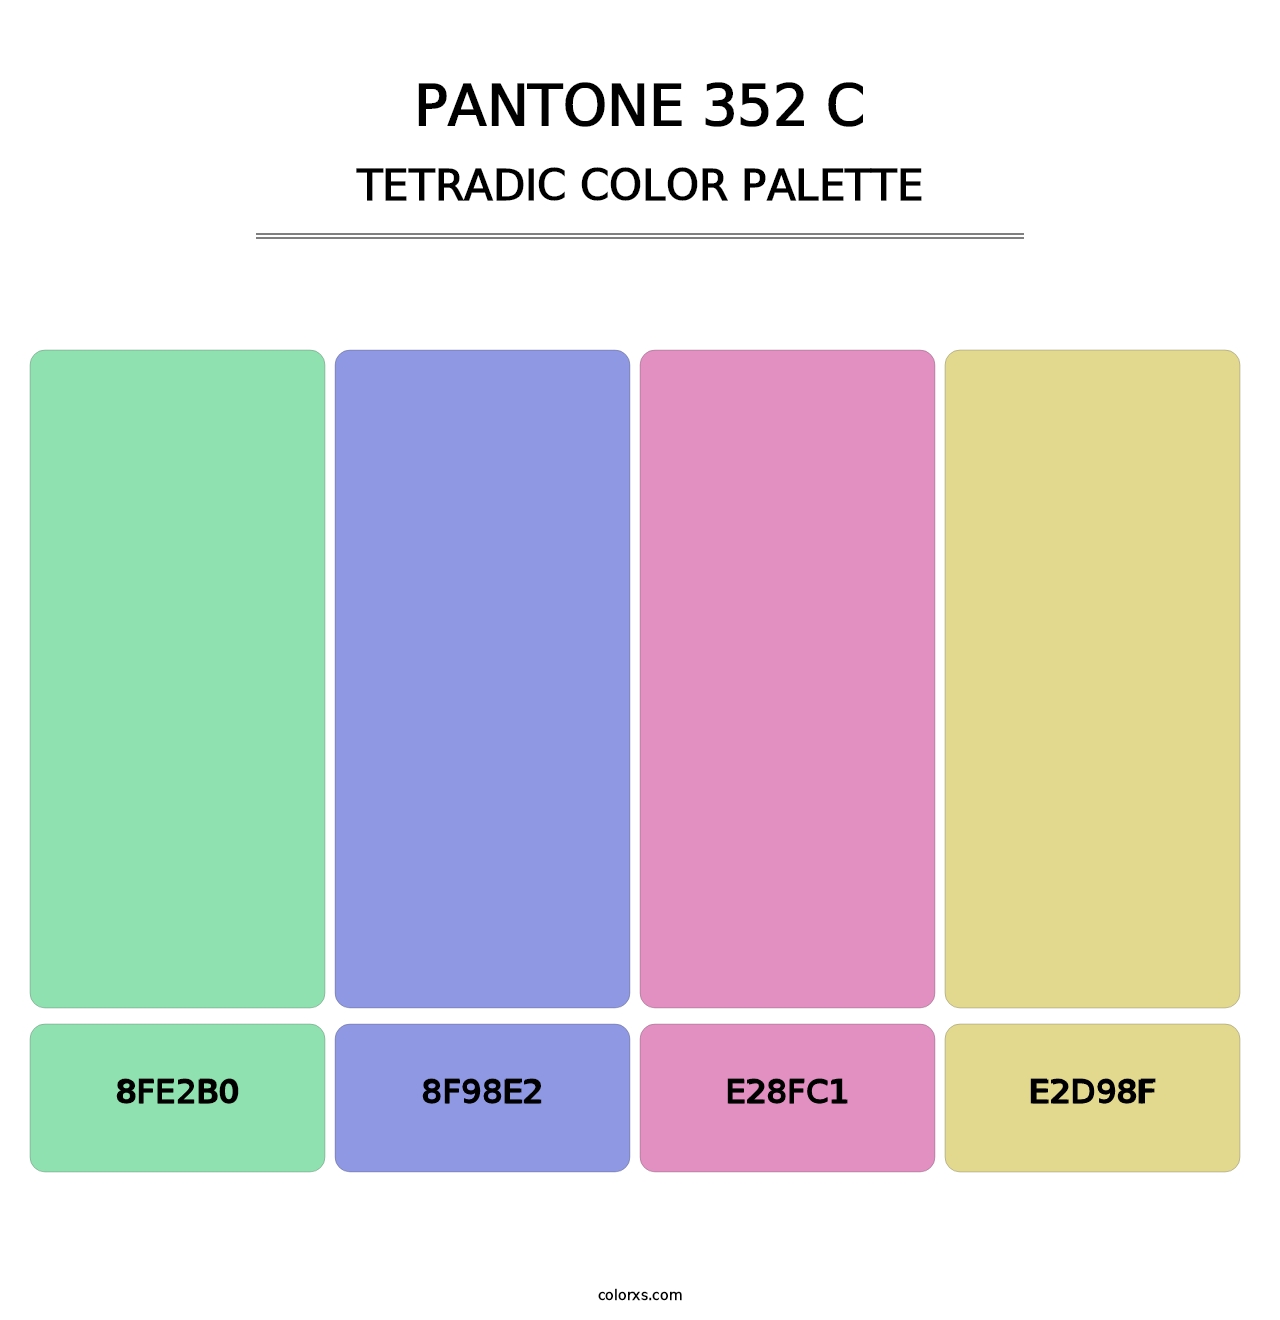 PANTONE 352 C - Tetradic Color Palette